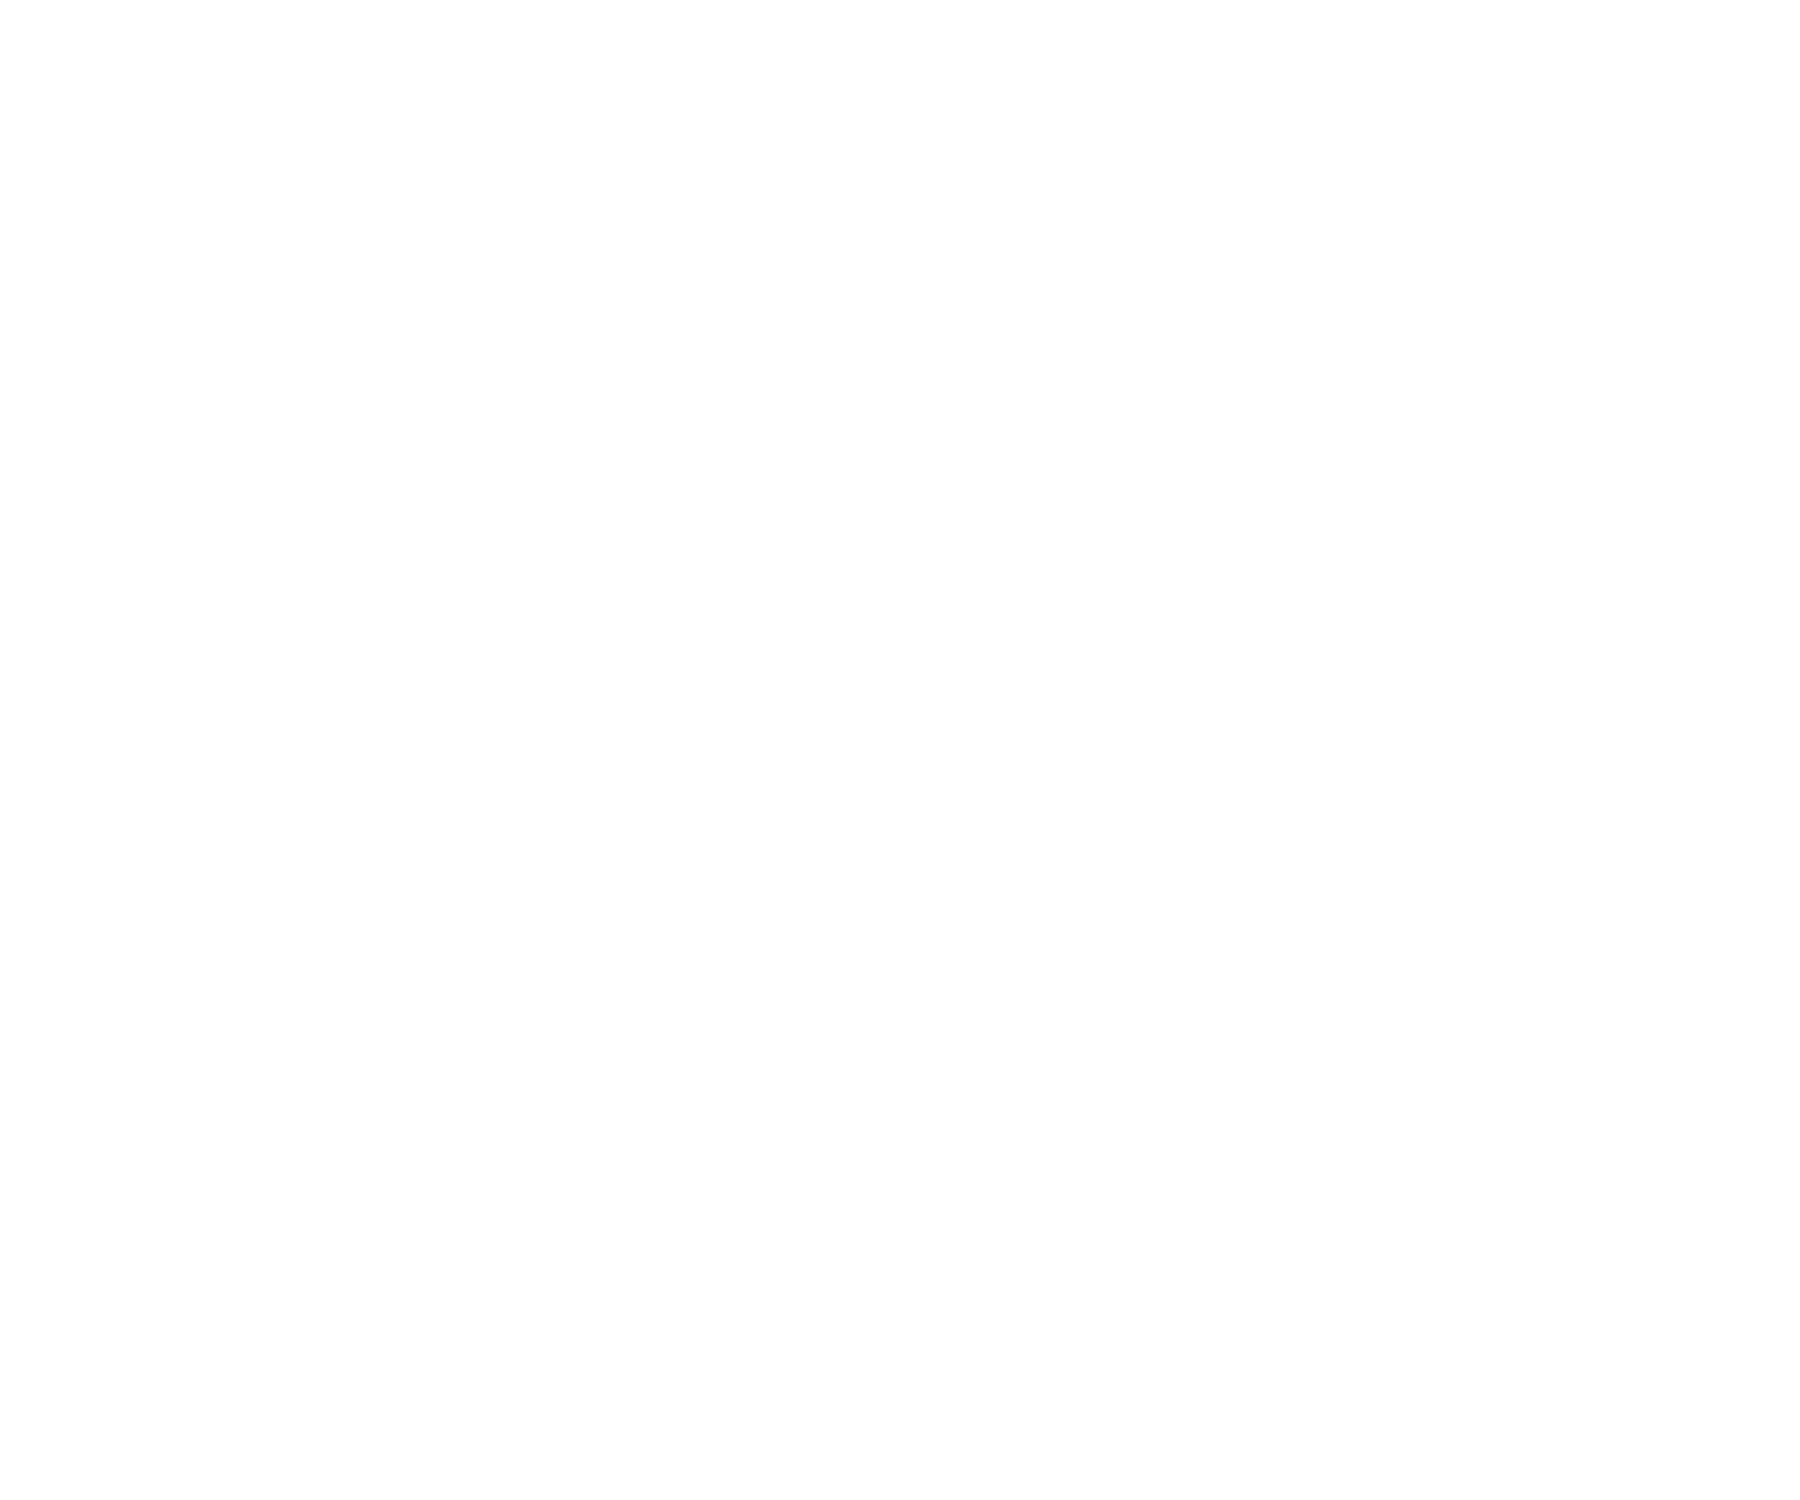 Cindicates - Win Together white logo